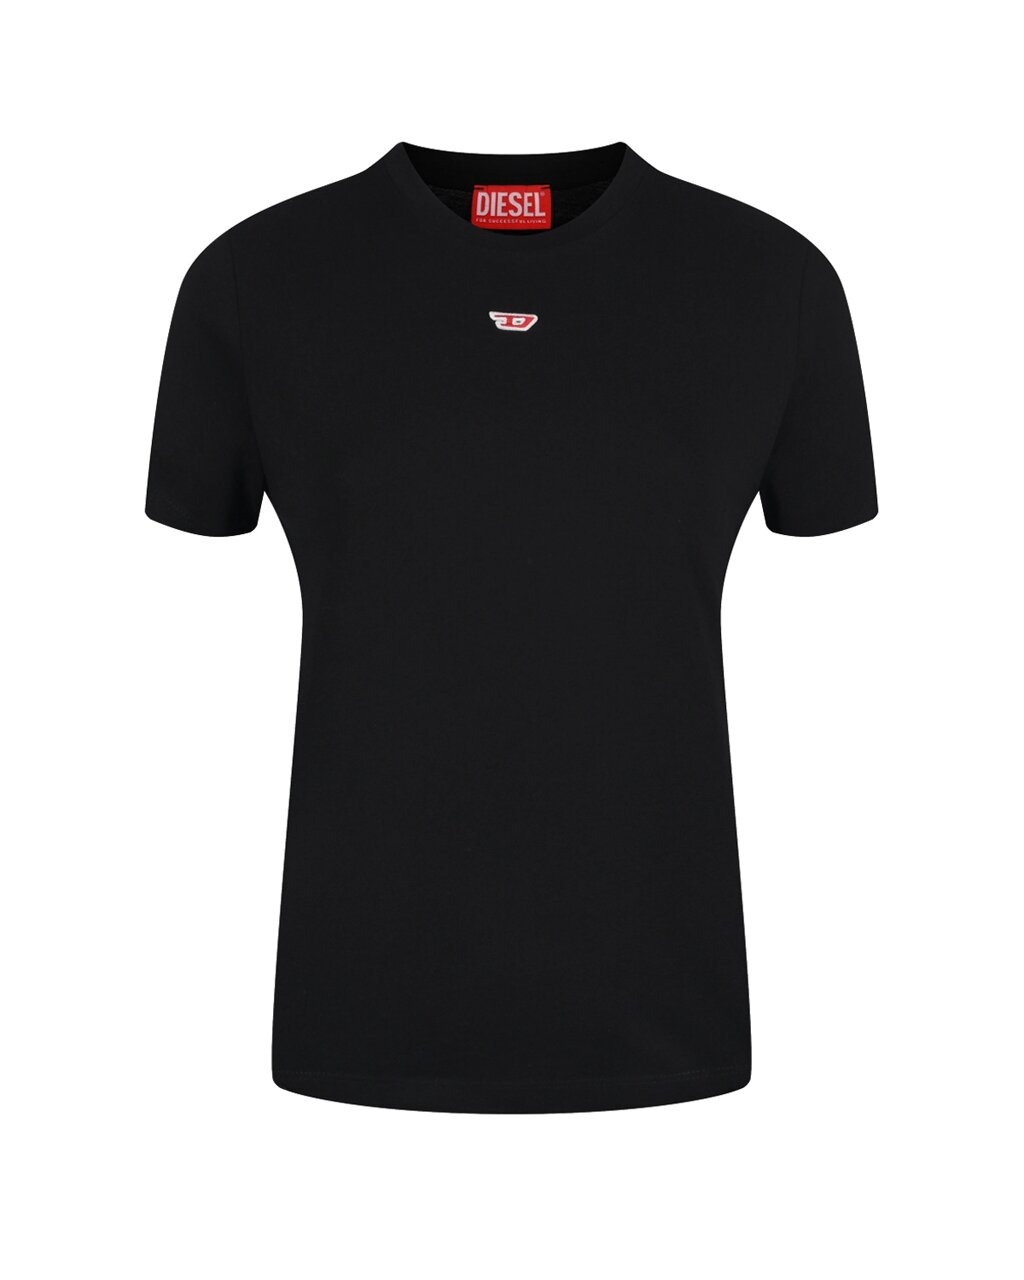 Базовая черная футболка Diesel от компании Admi - фото 1